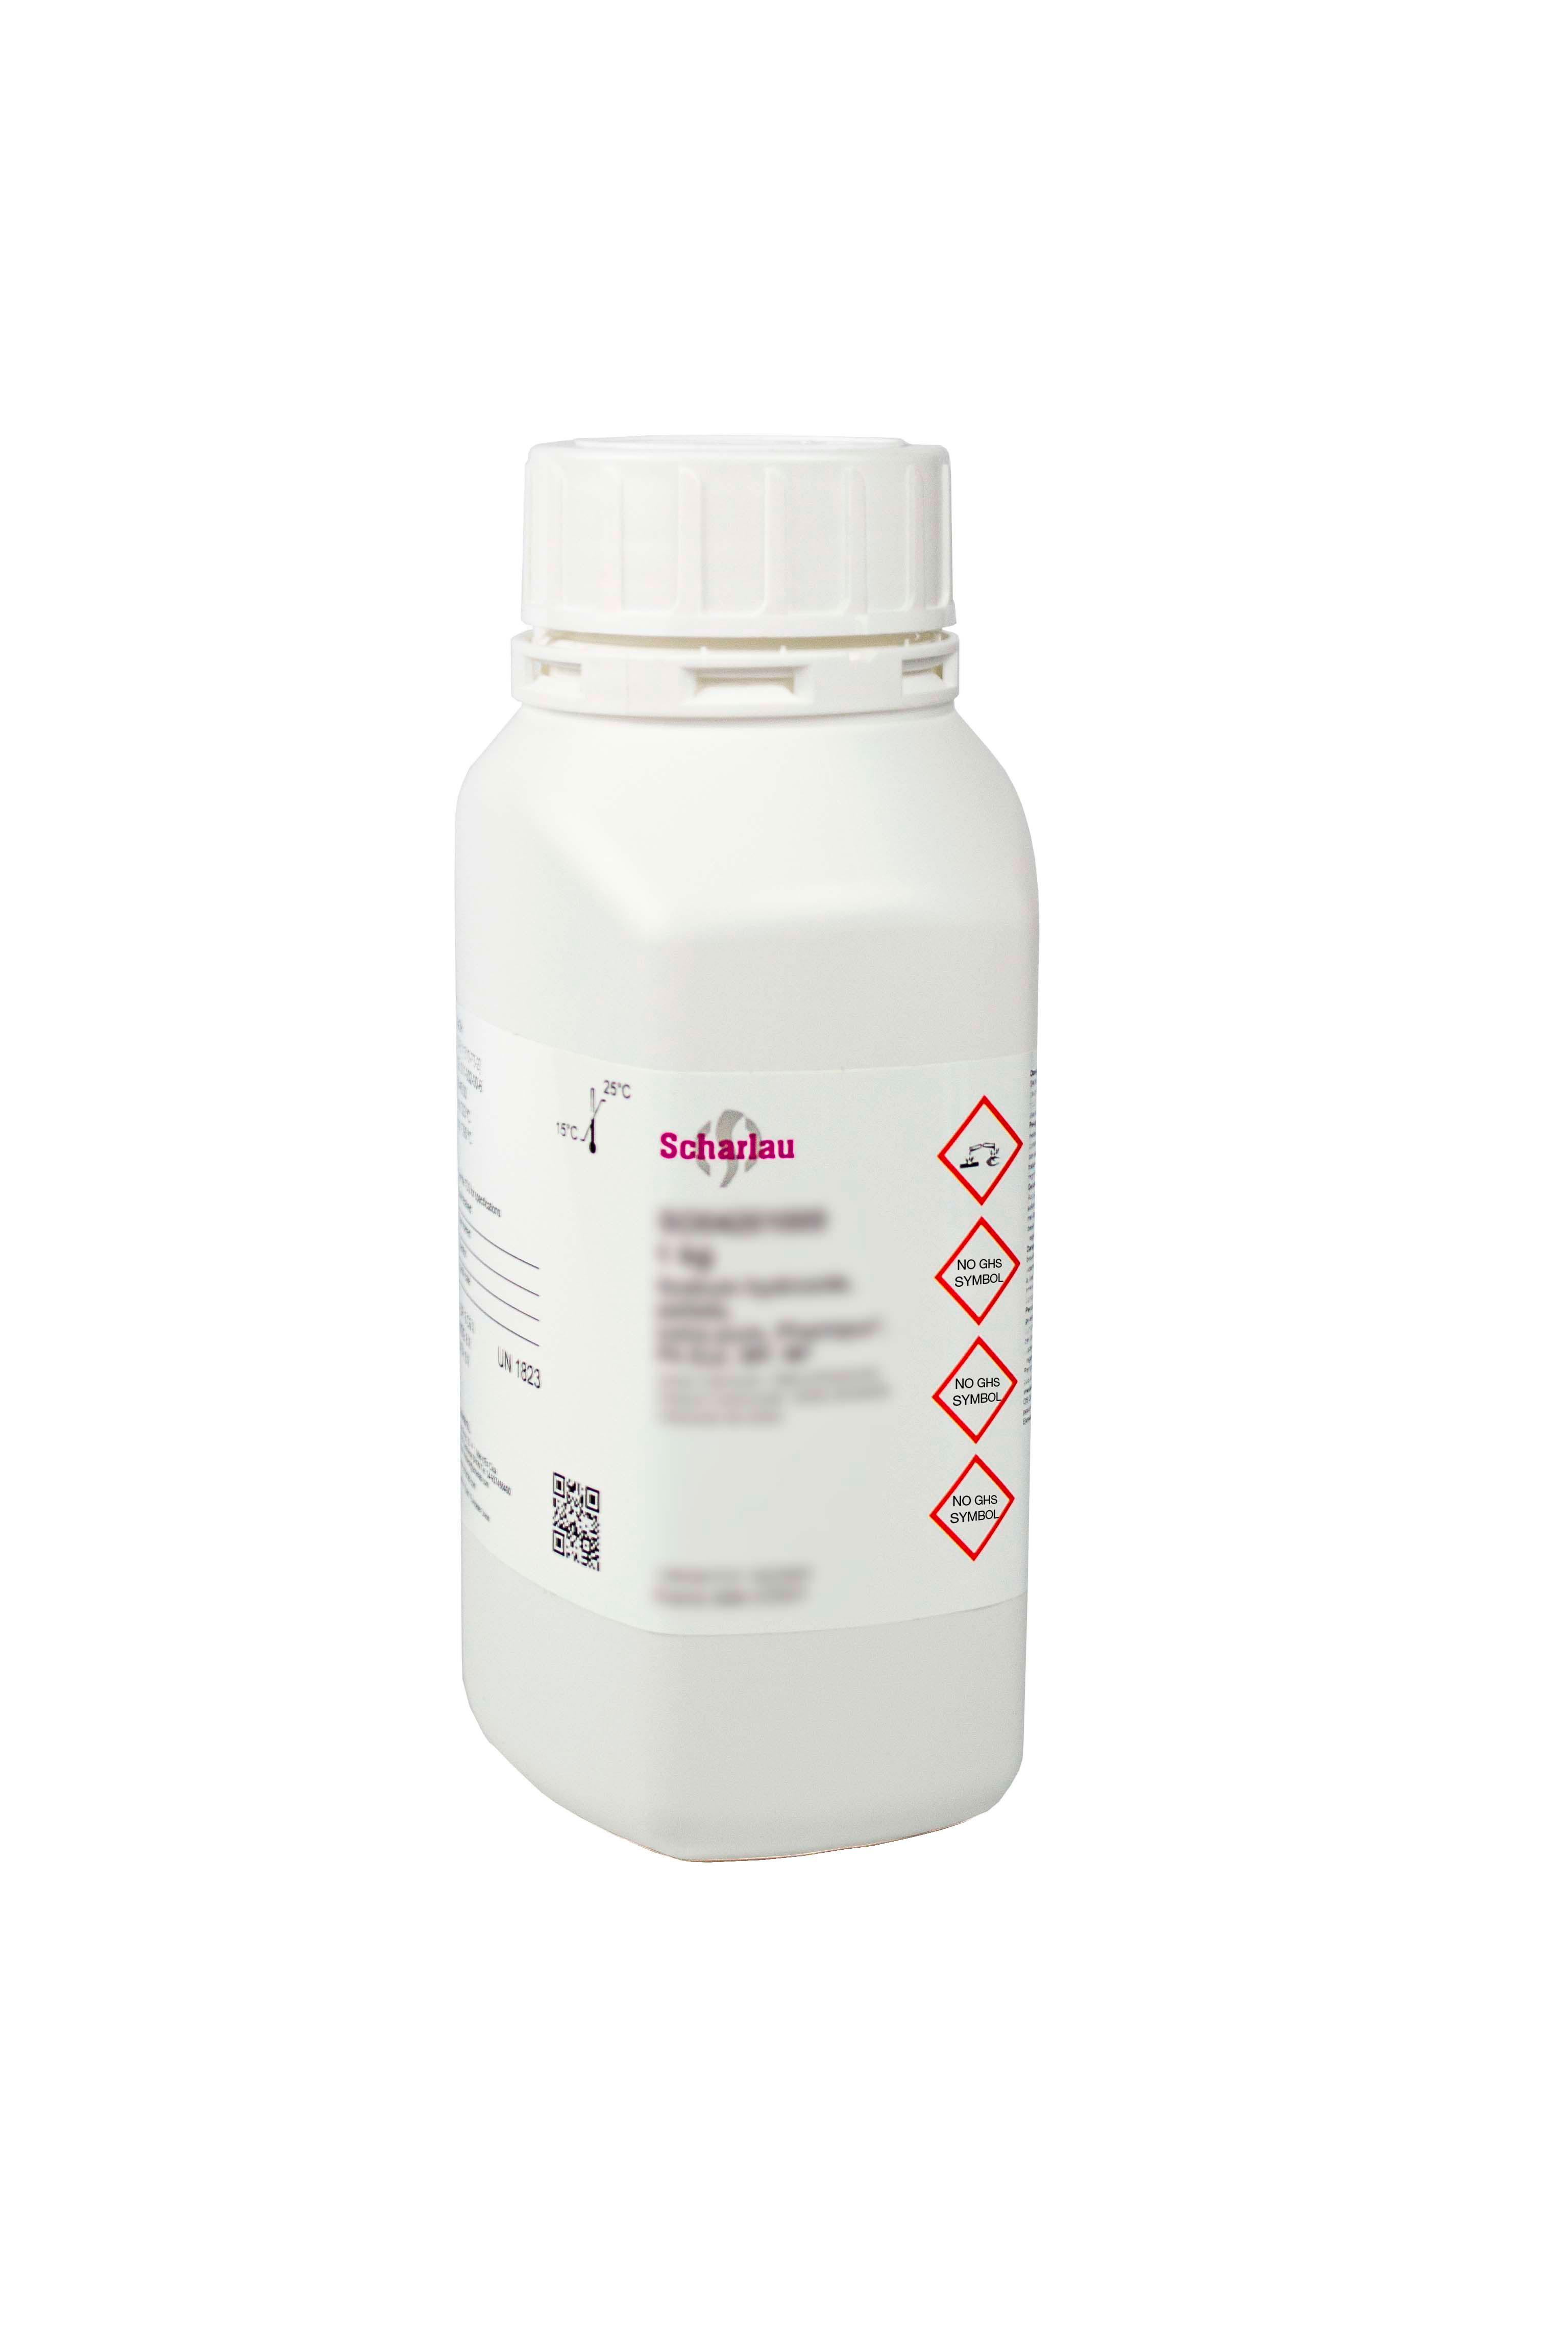 di-Sodio hidrogenofosfato dihidrato, Pharmpur®, Ph Eur, BP, USP